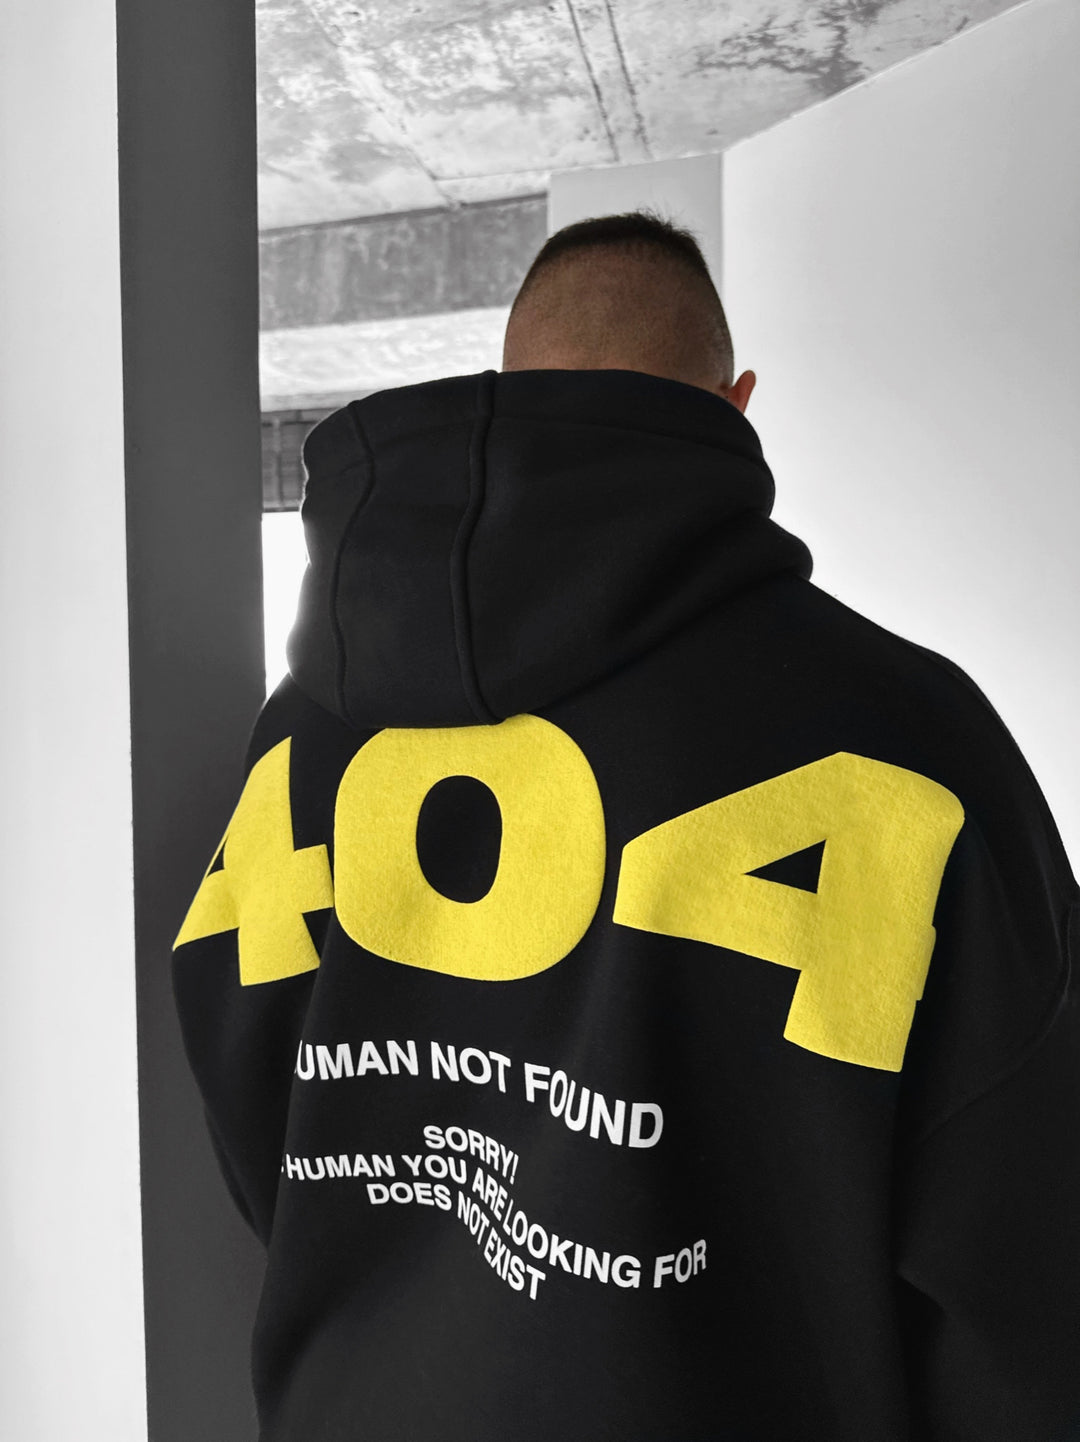 Oversize 404 Hoodie - Black